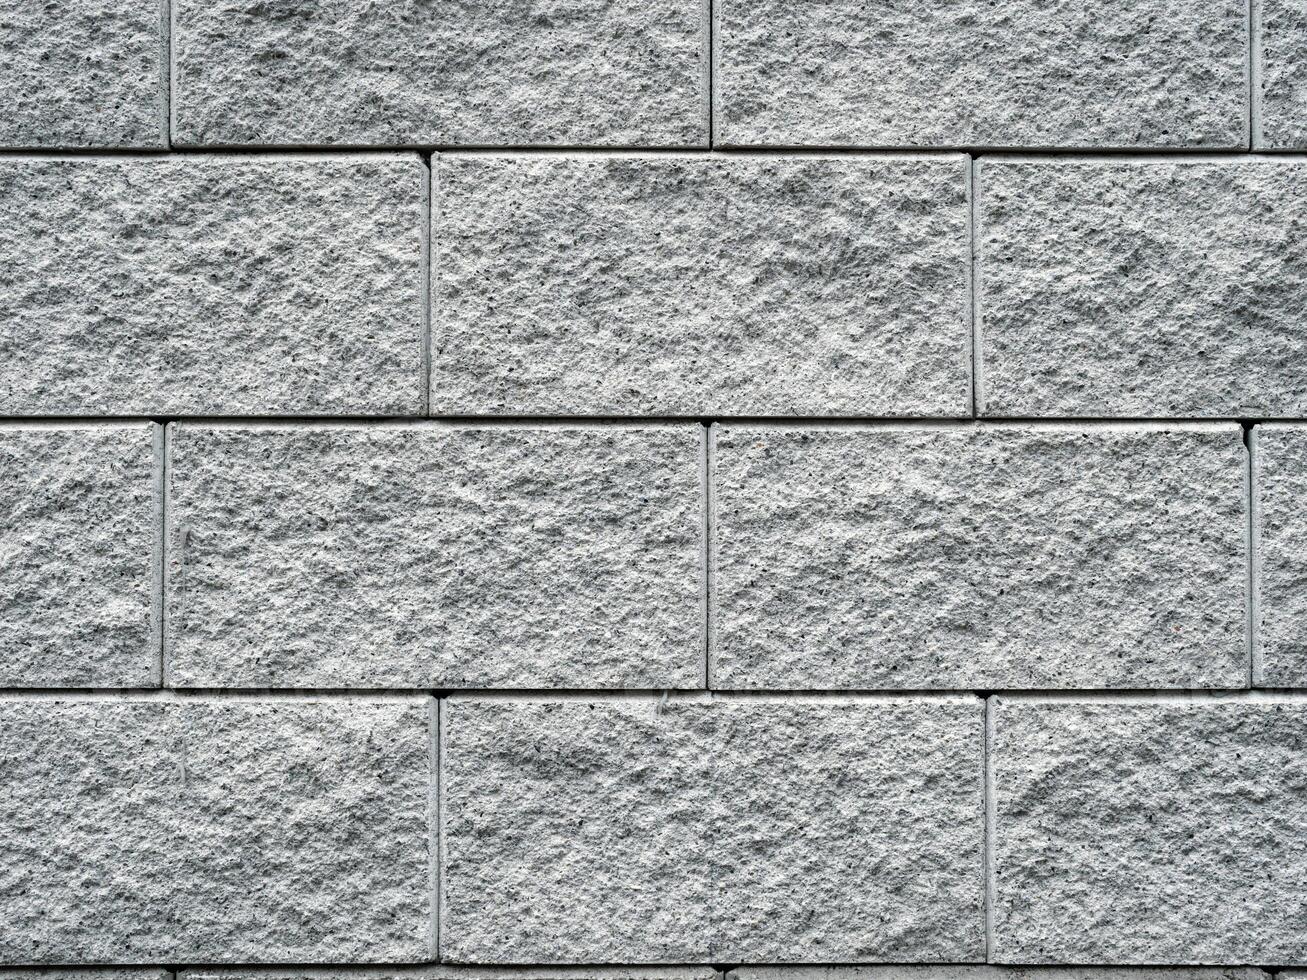 Brick wall pattern background, brick house walls texture photo